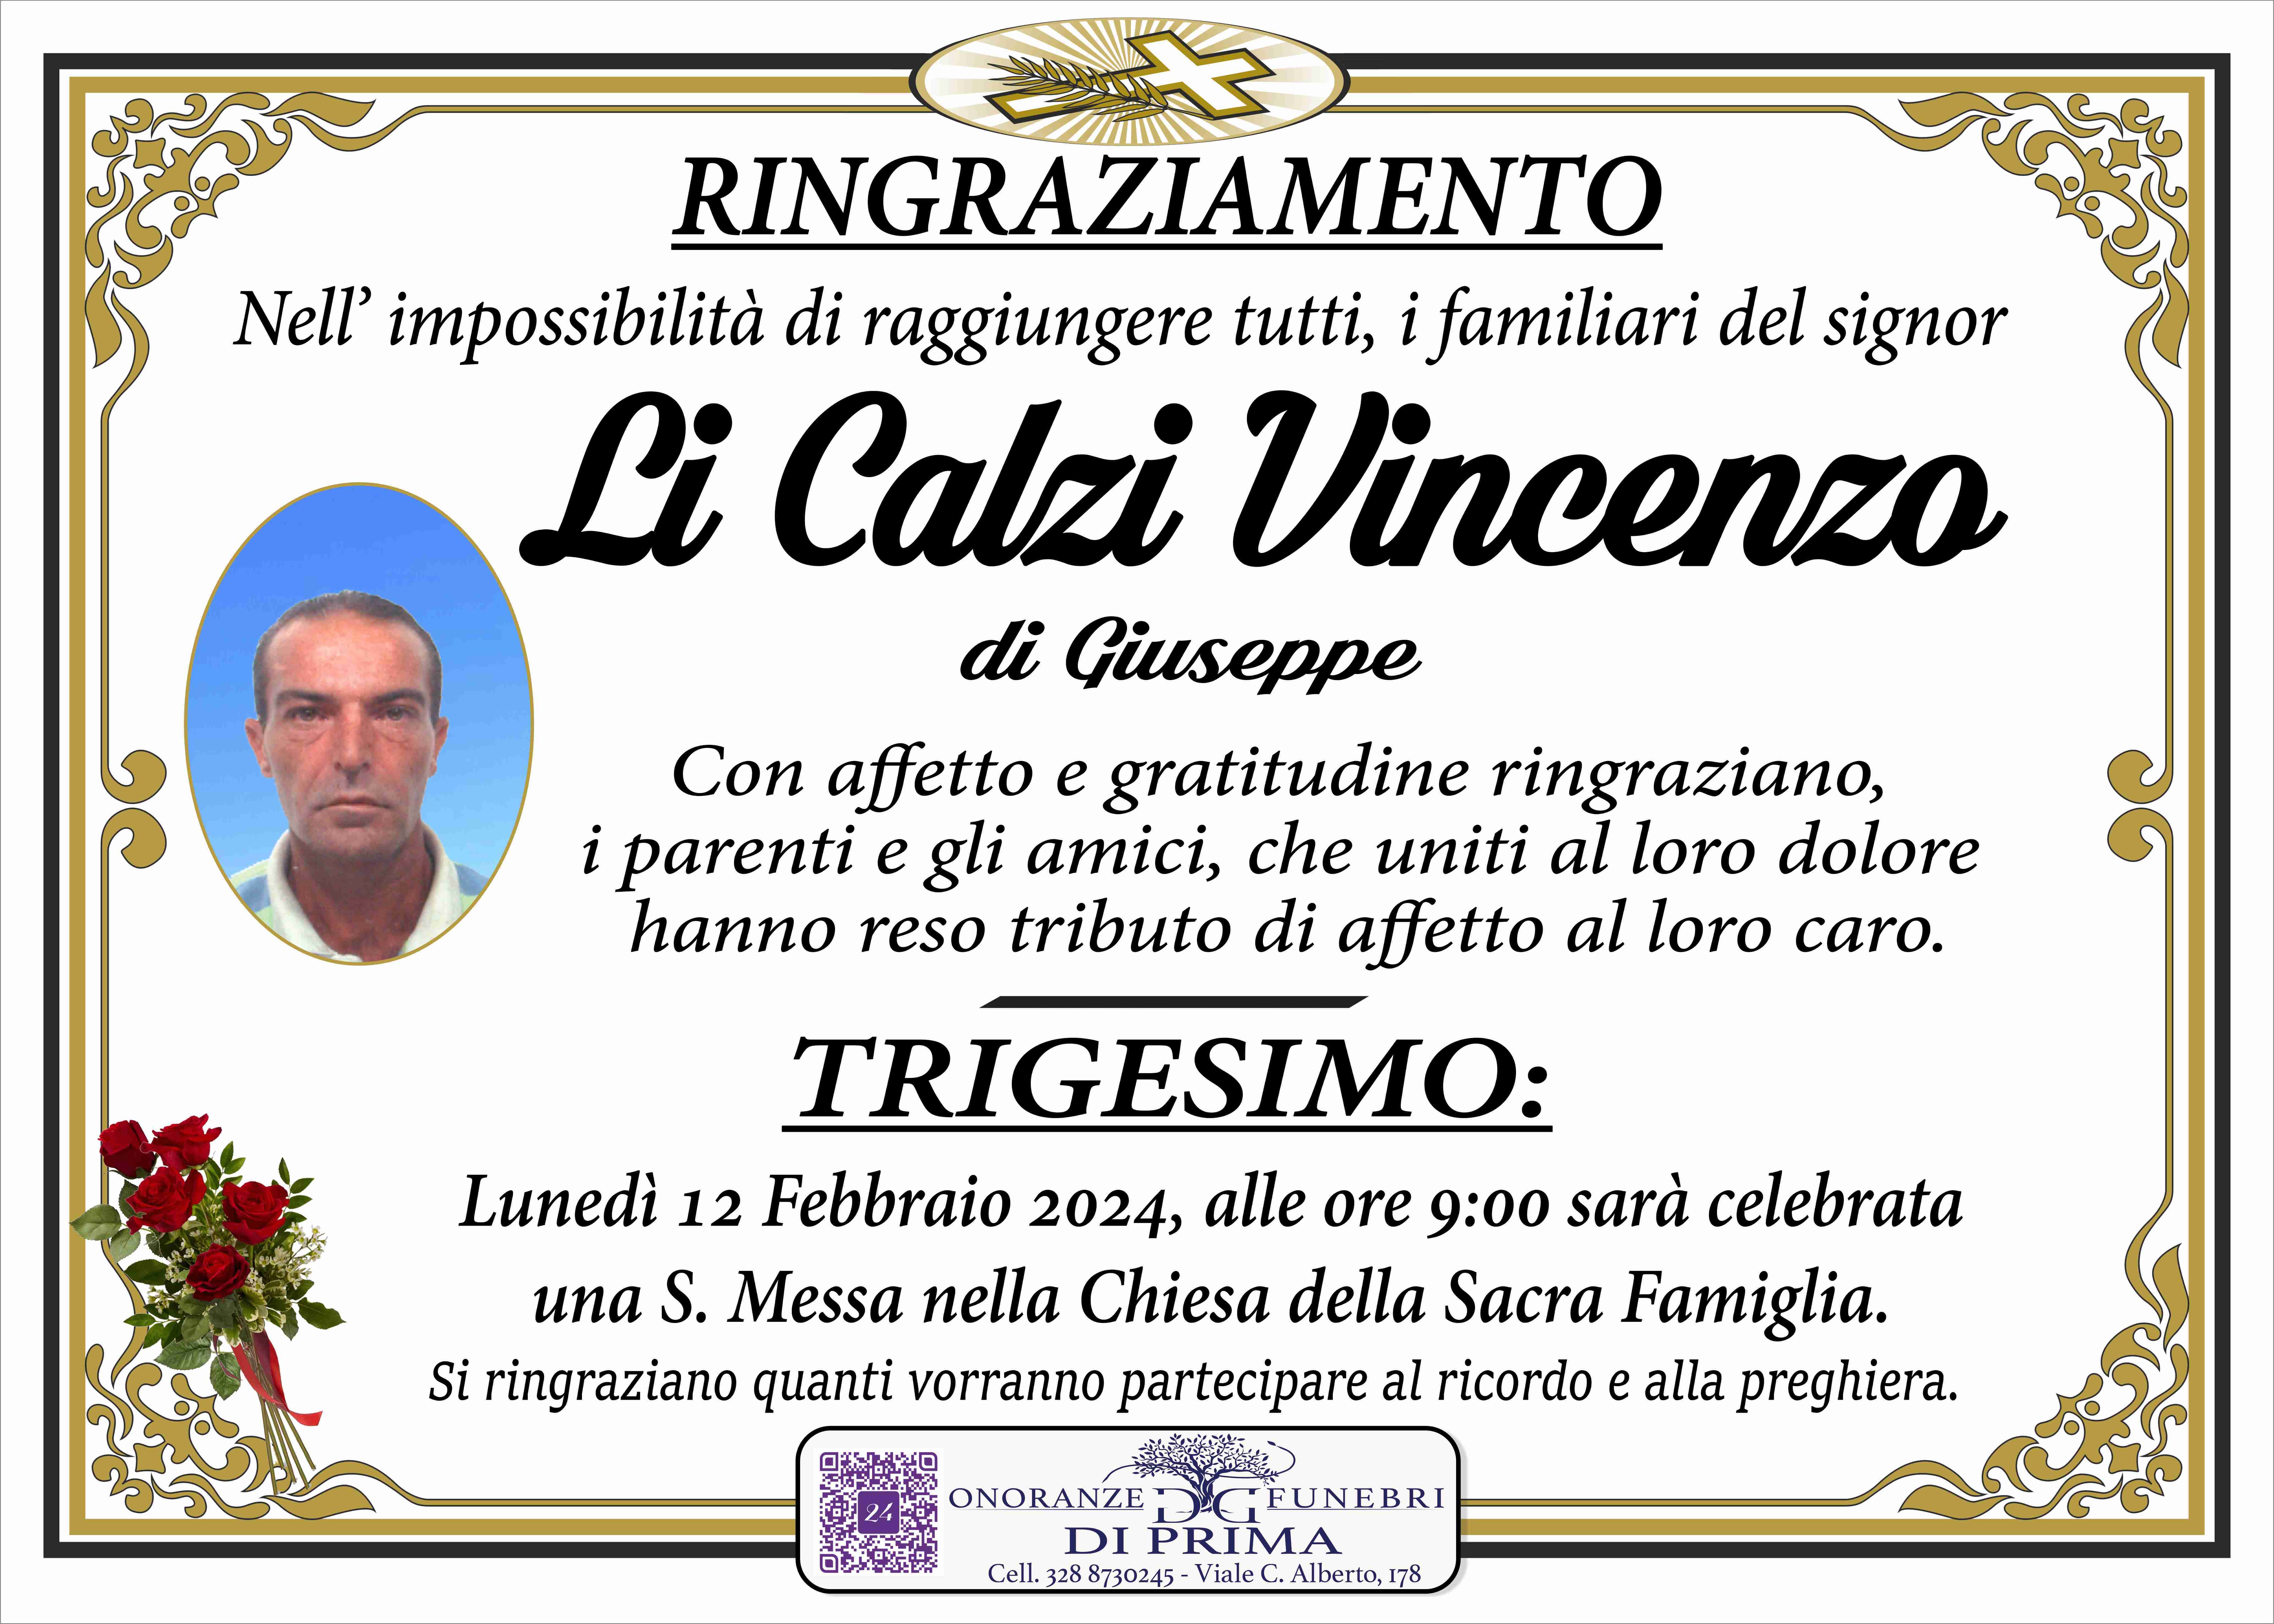 Vincenzo Li Calzi